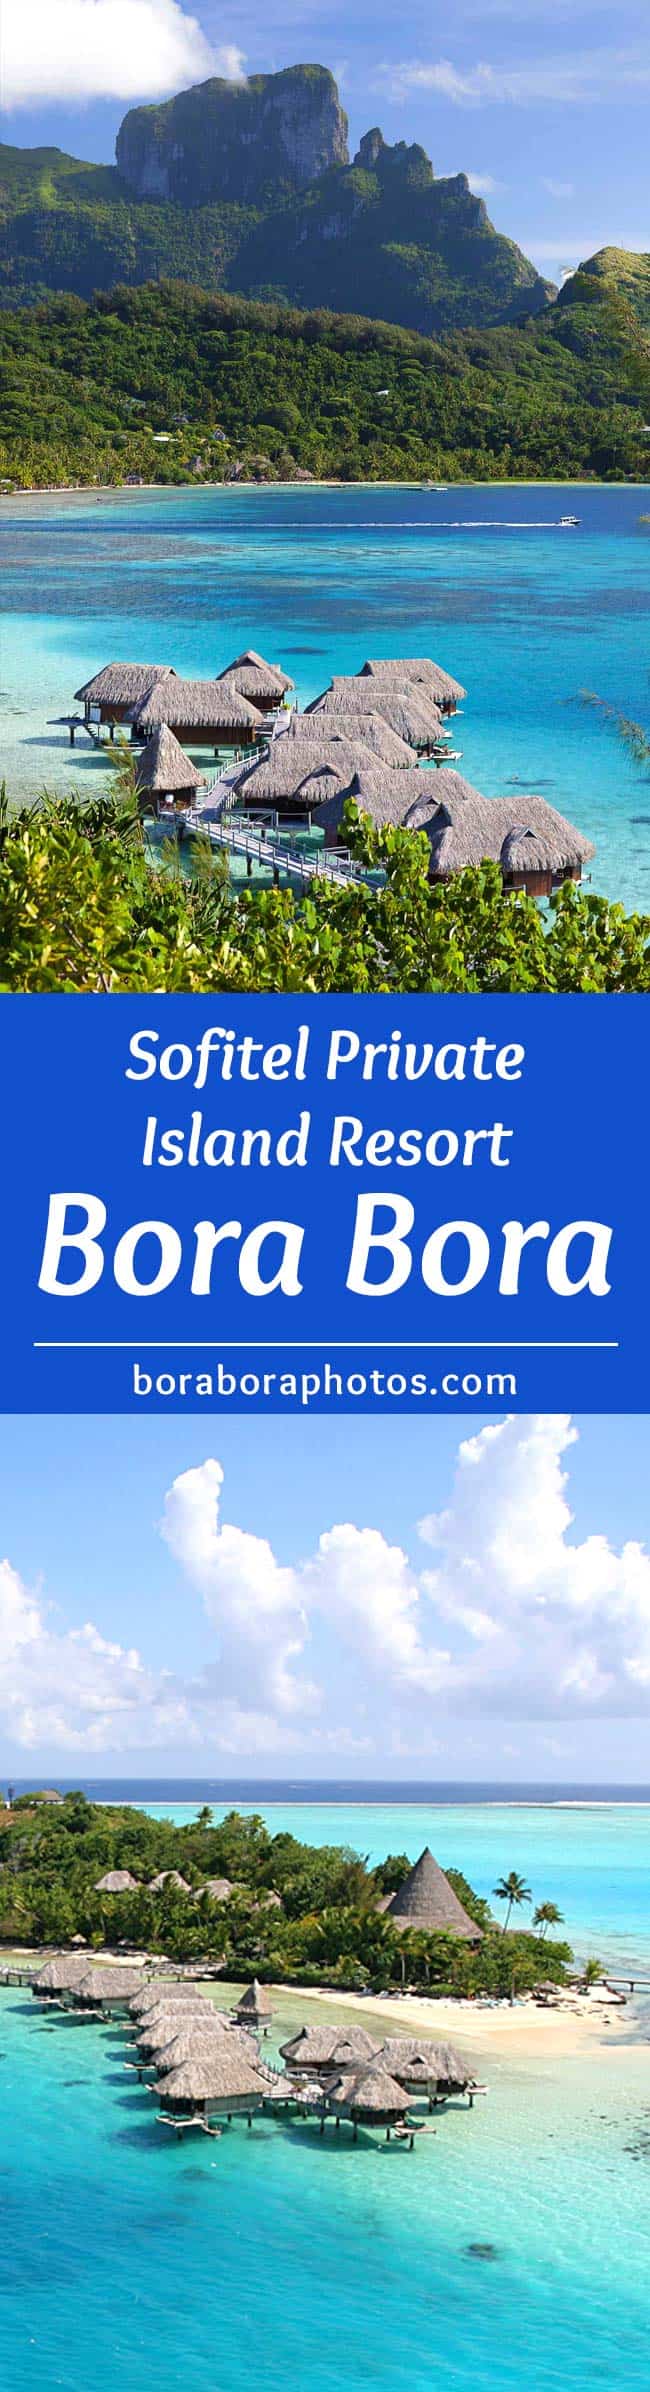 Sofitel Private Island Resort